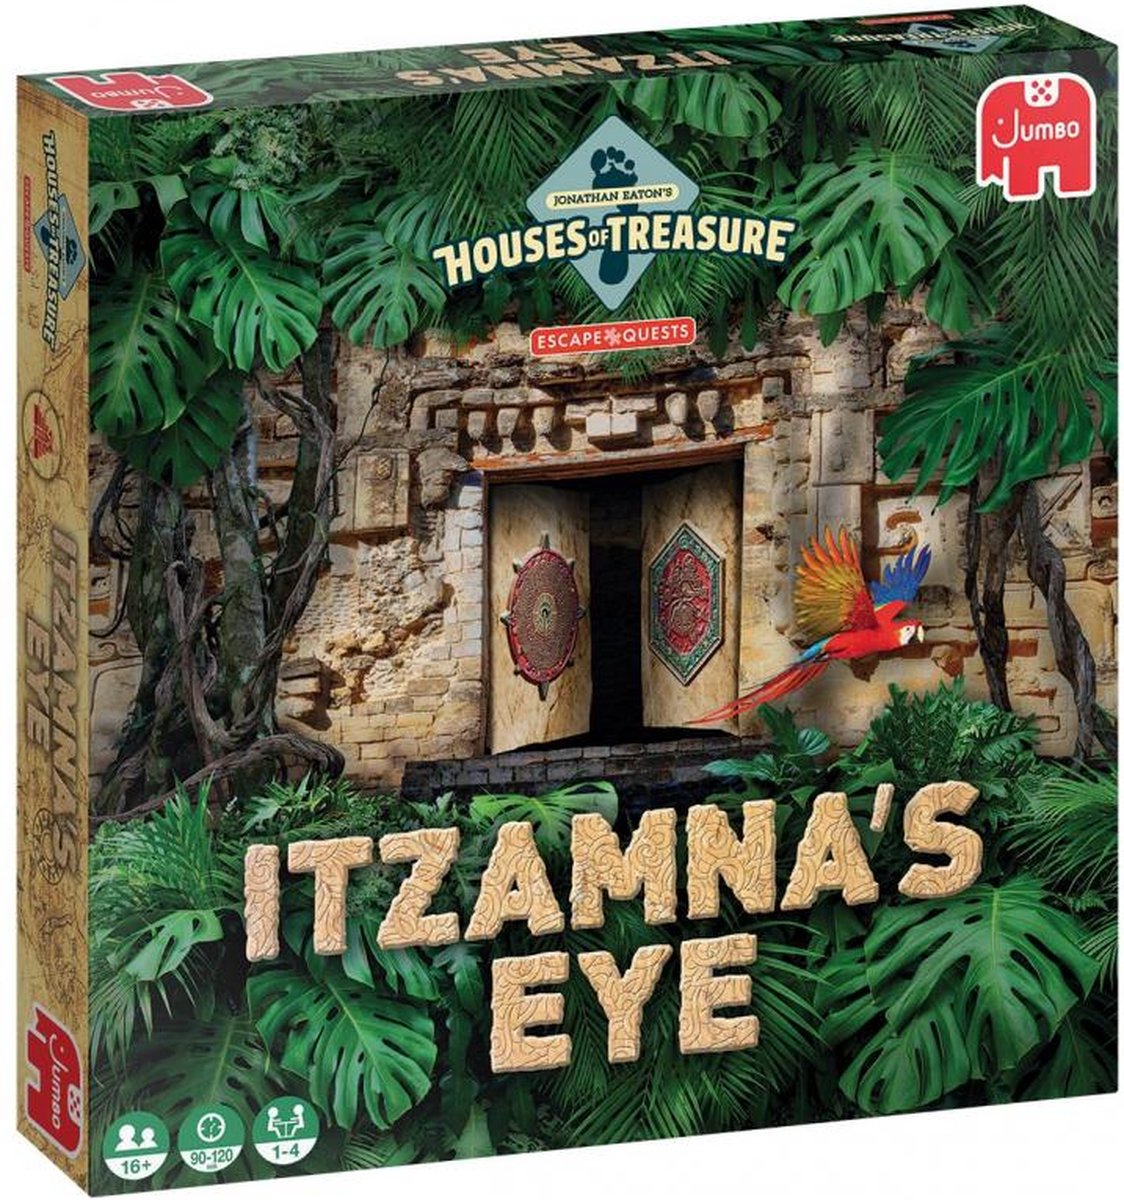 Houses of Treasure Escape Quest Itzamna's Eye